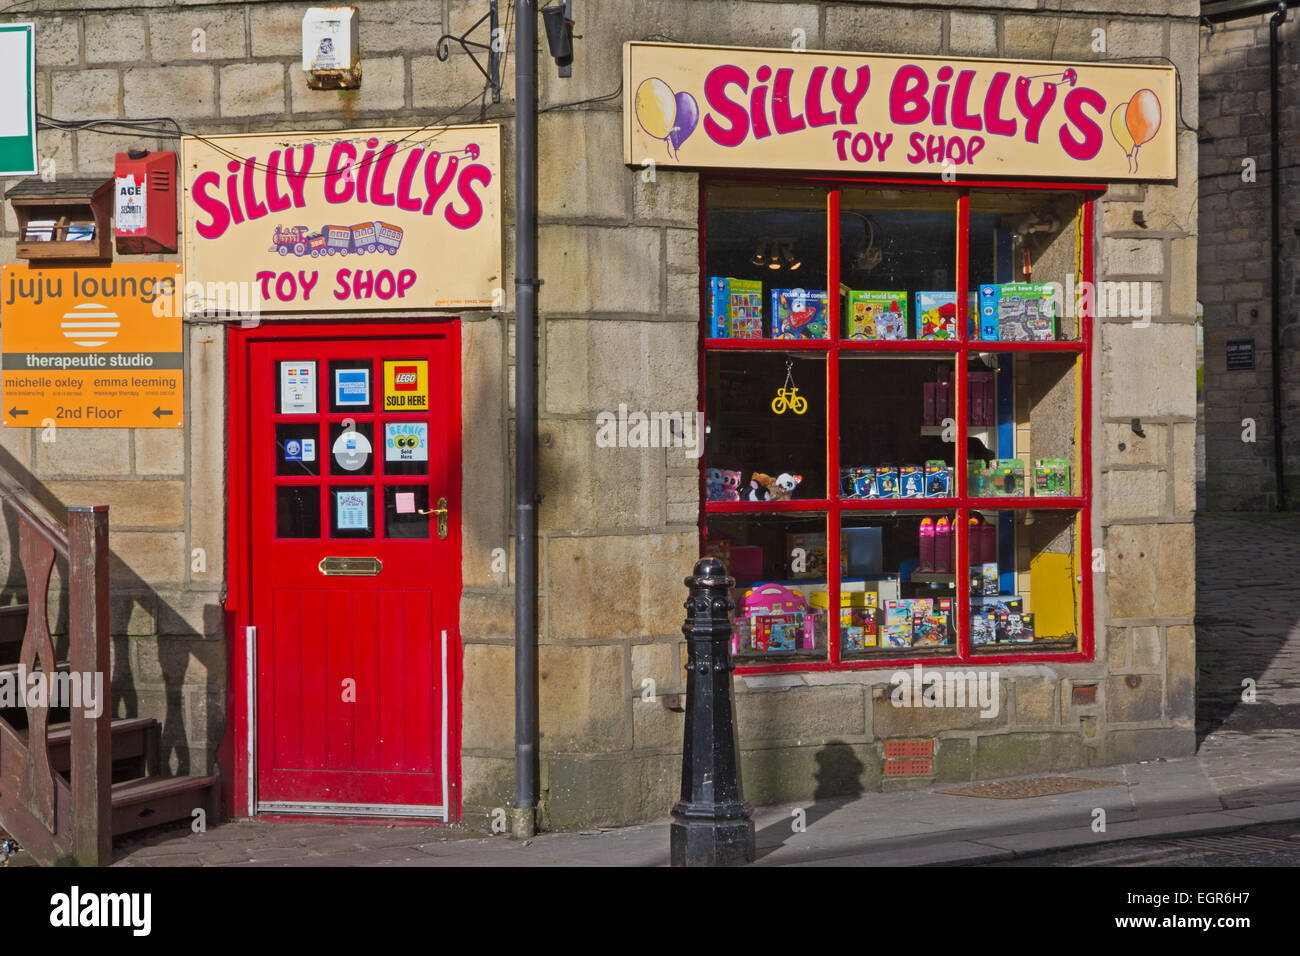 Silly Billy's toy shop, Hebden Bridge, West Yorkshire Foto de stock